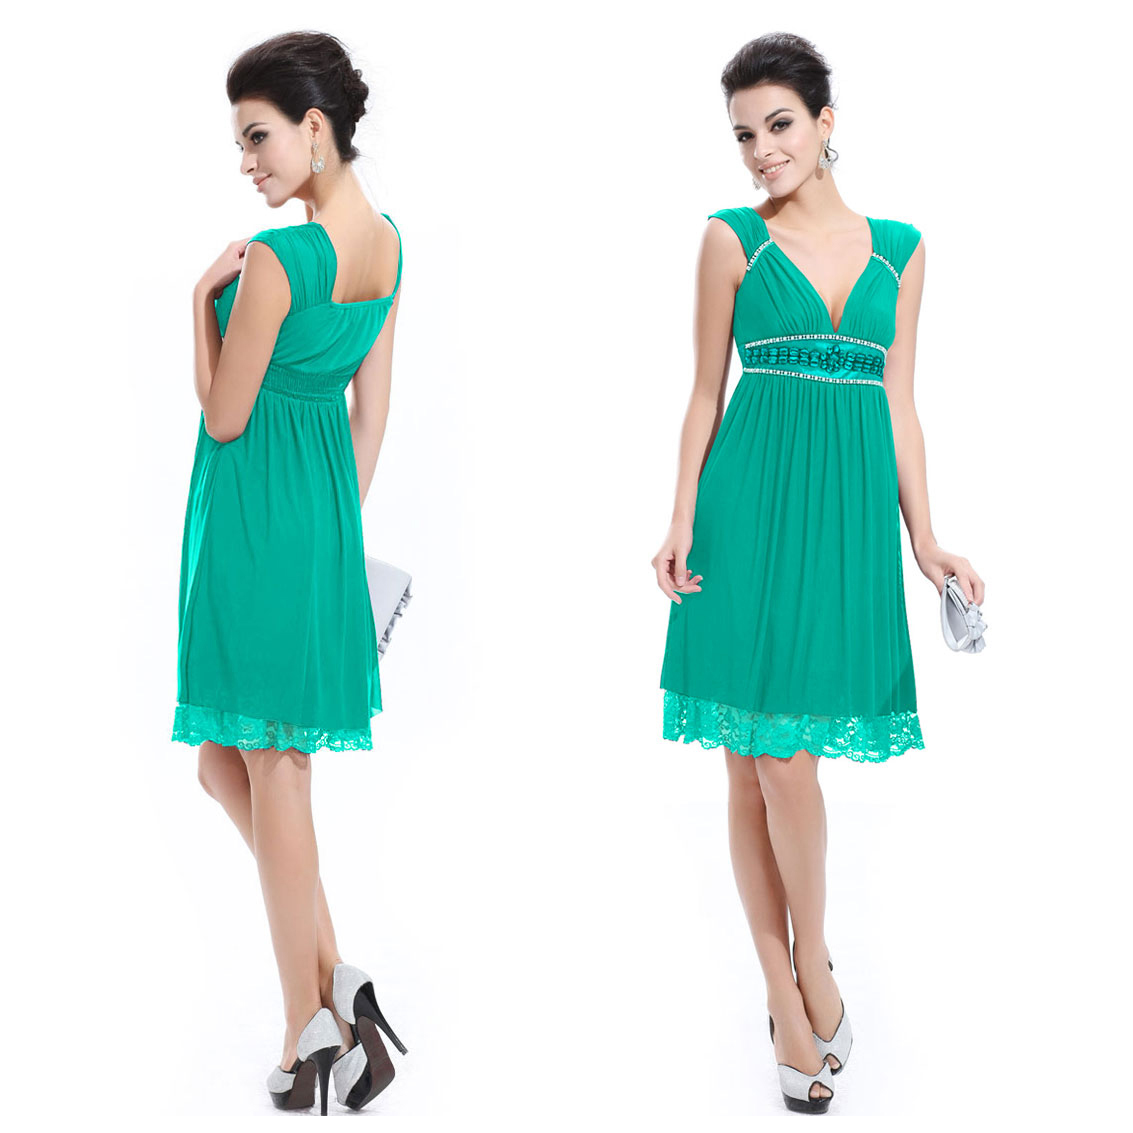 Neck Stunning Rhinestones Greens Cap Sleeve Casual Dresses 28107GR 